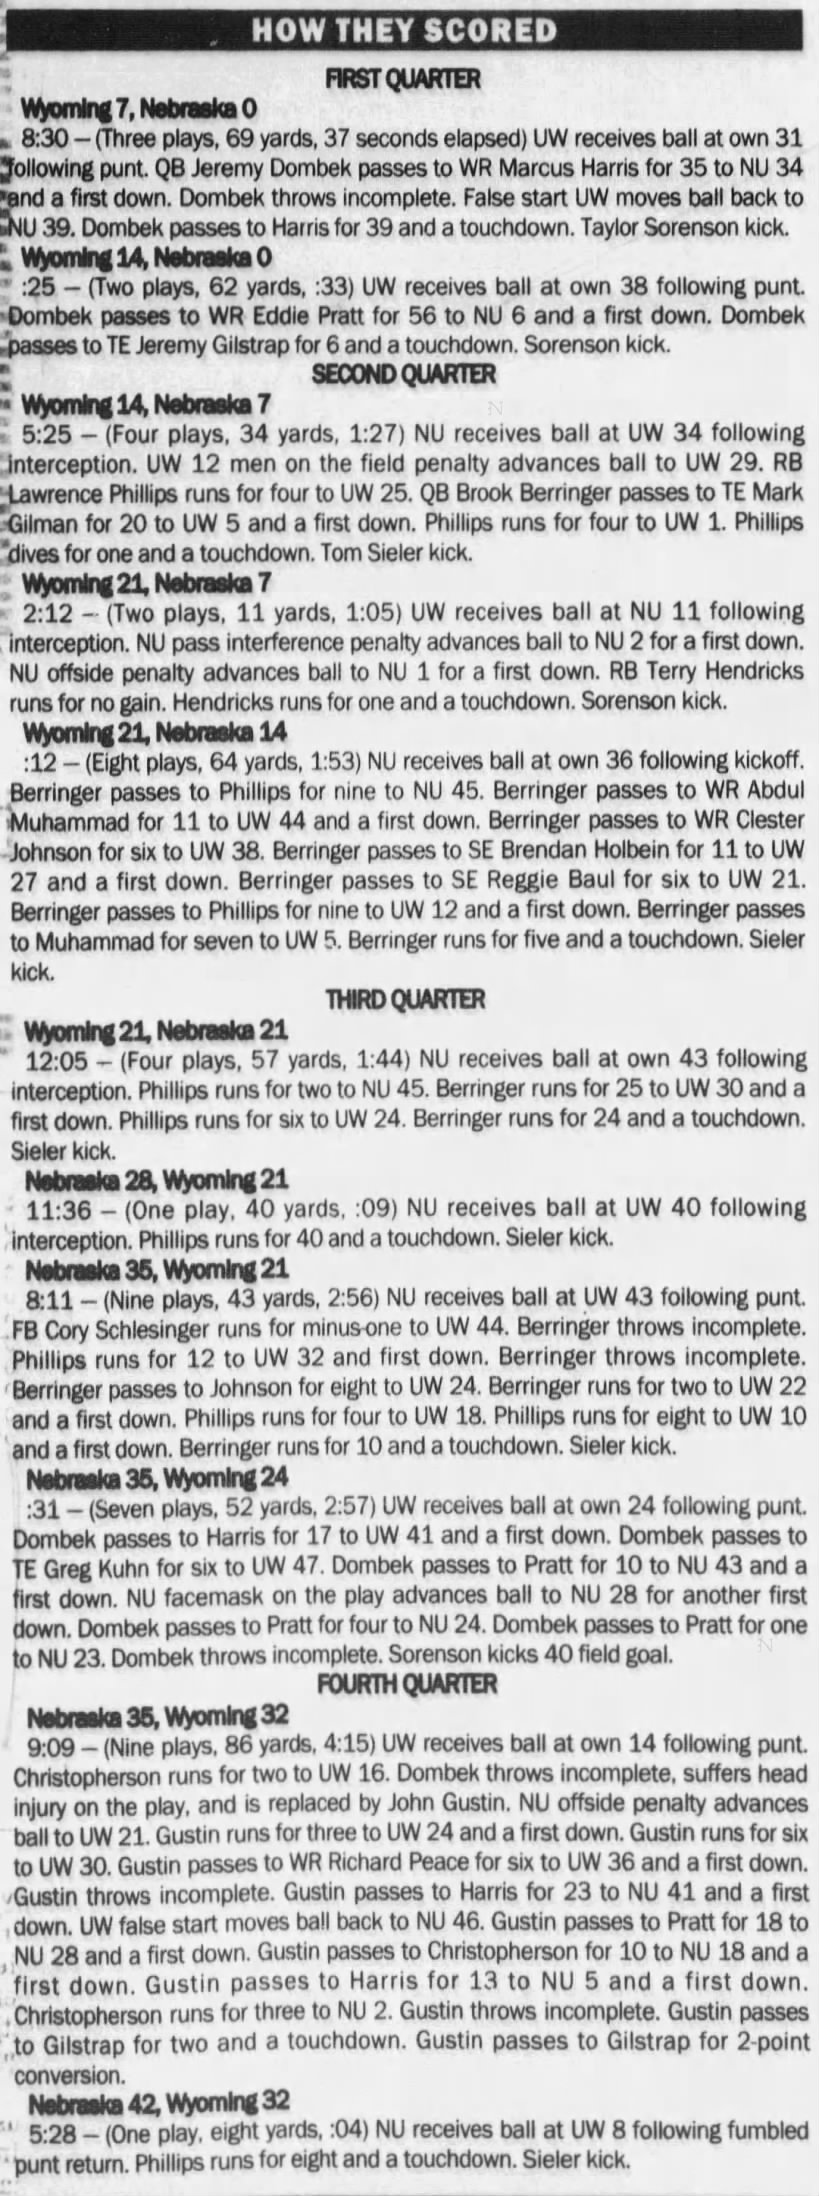 1994 Nebraska-Wyoming scoring summary